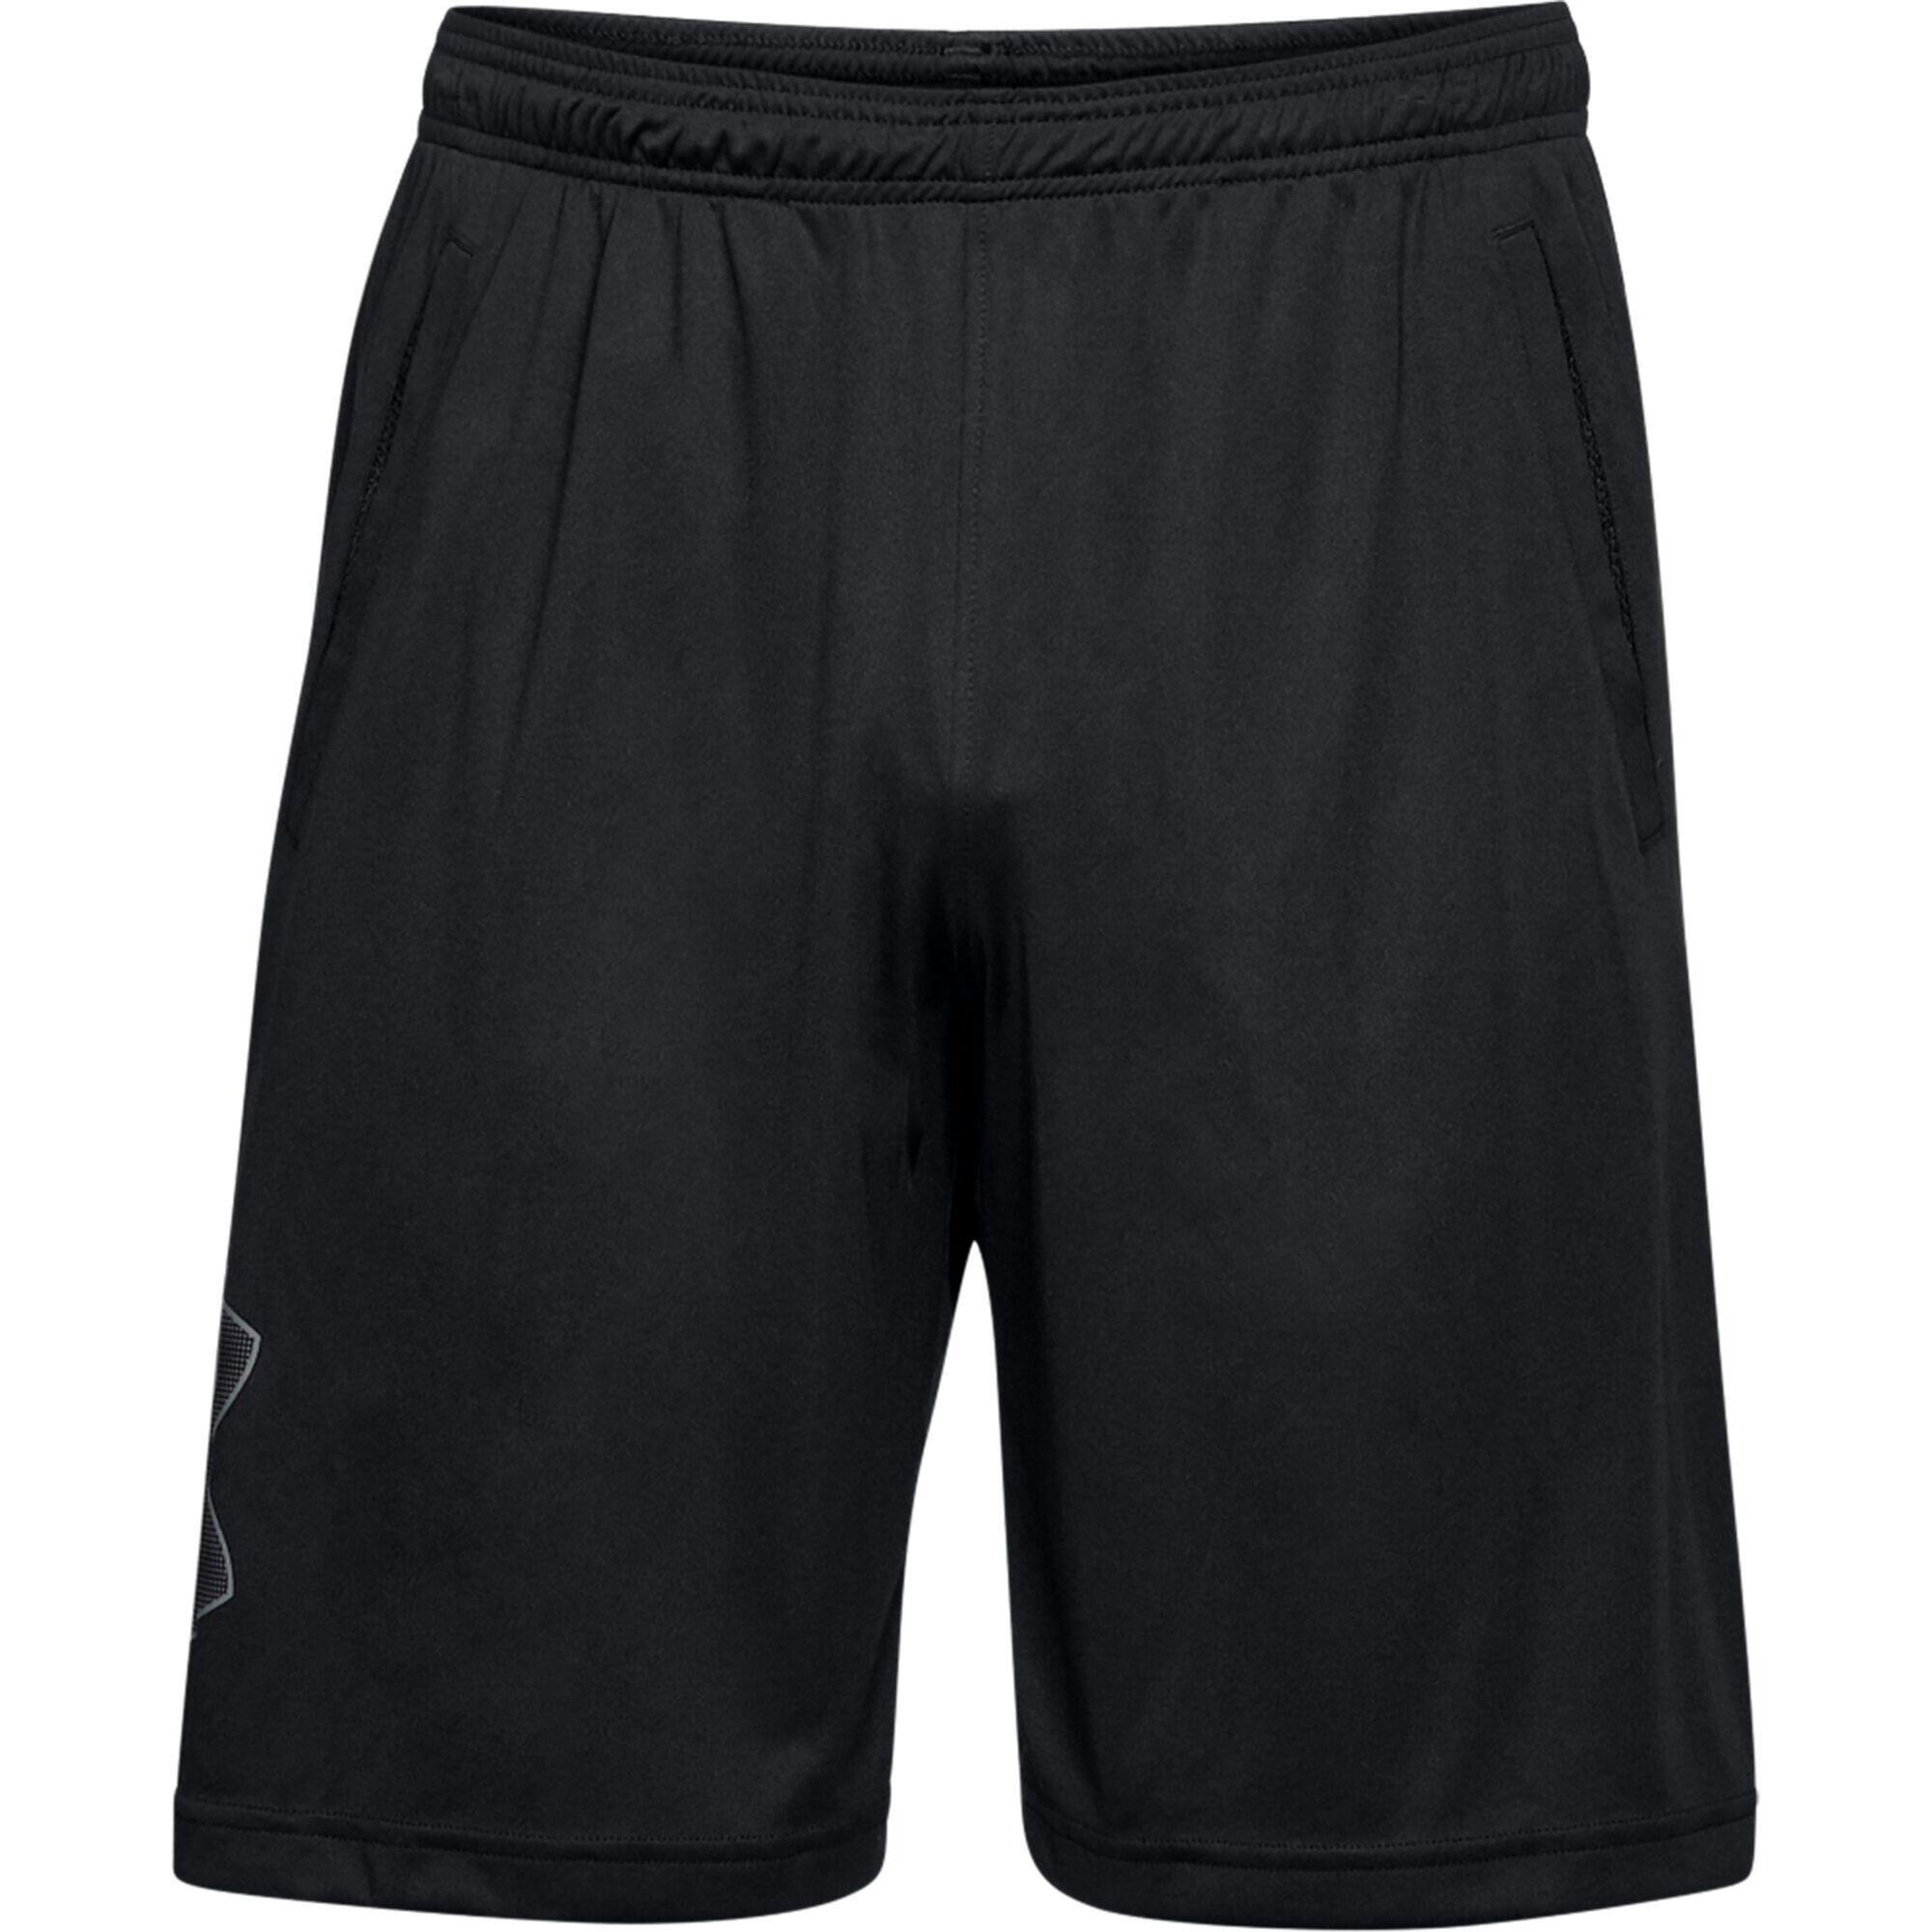 Mens Tech Shorts (Black/Light Graphite) 1/4